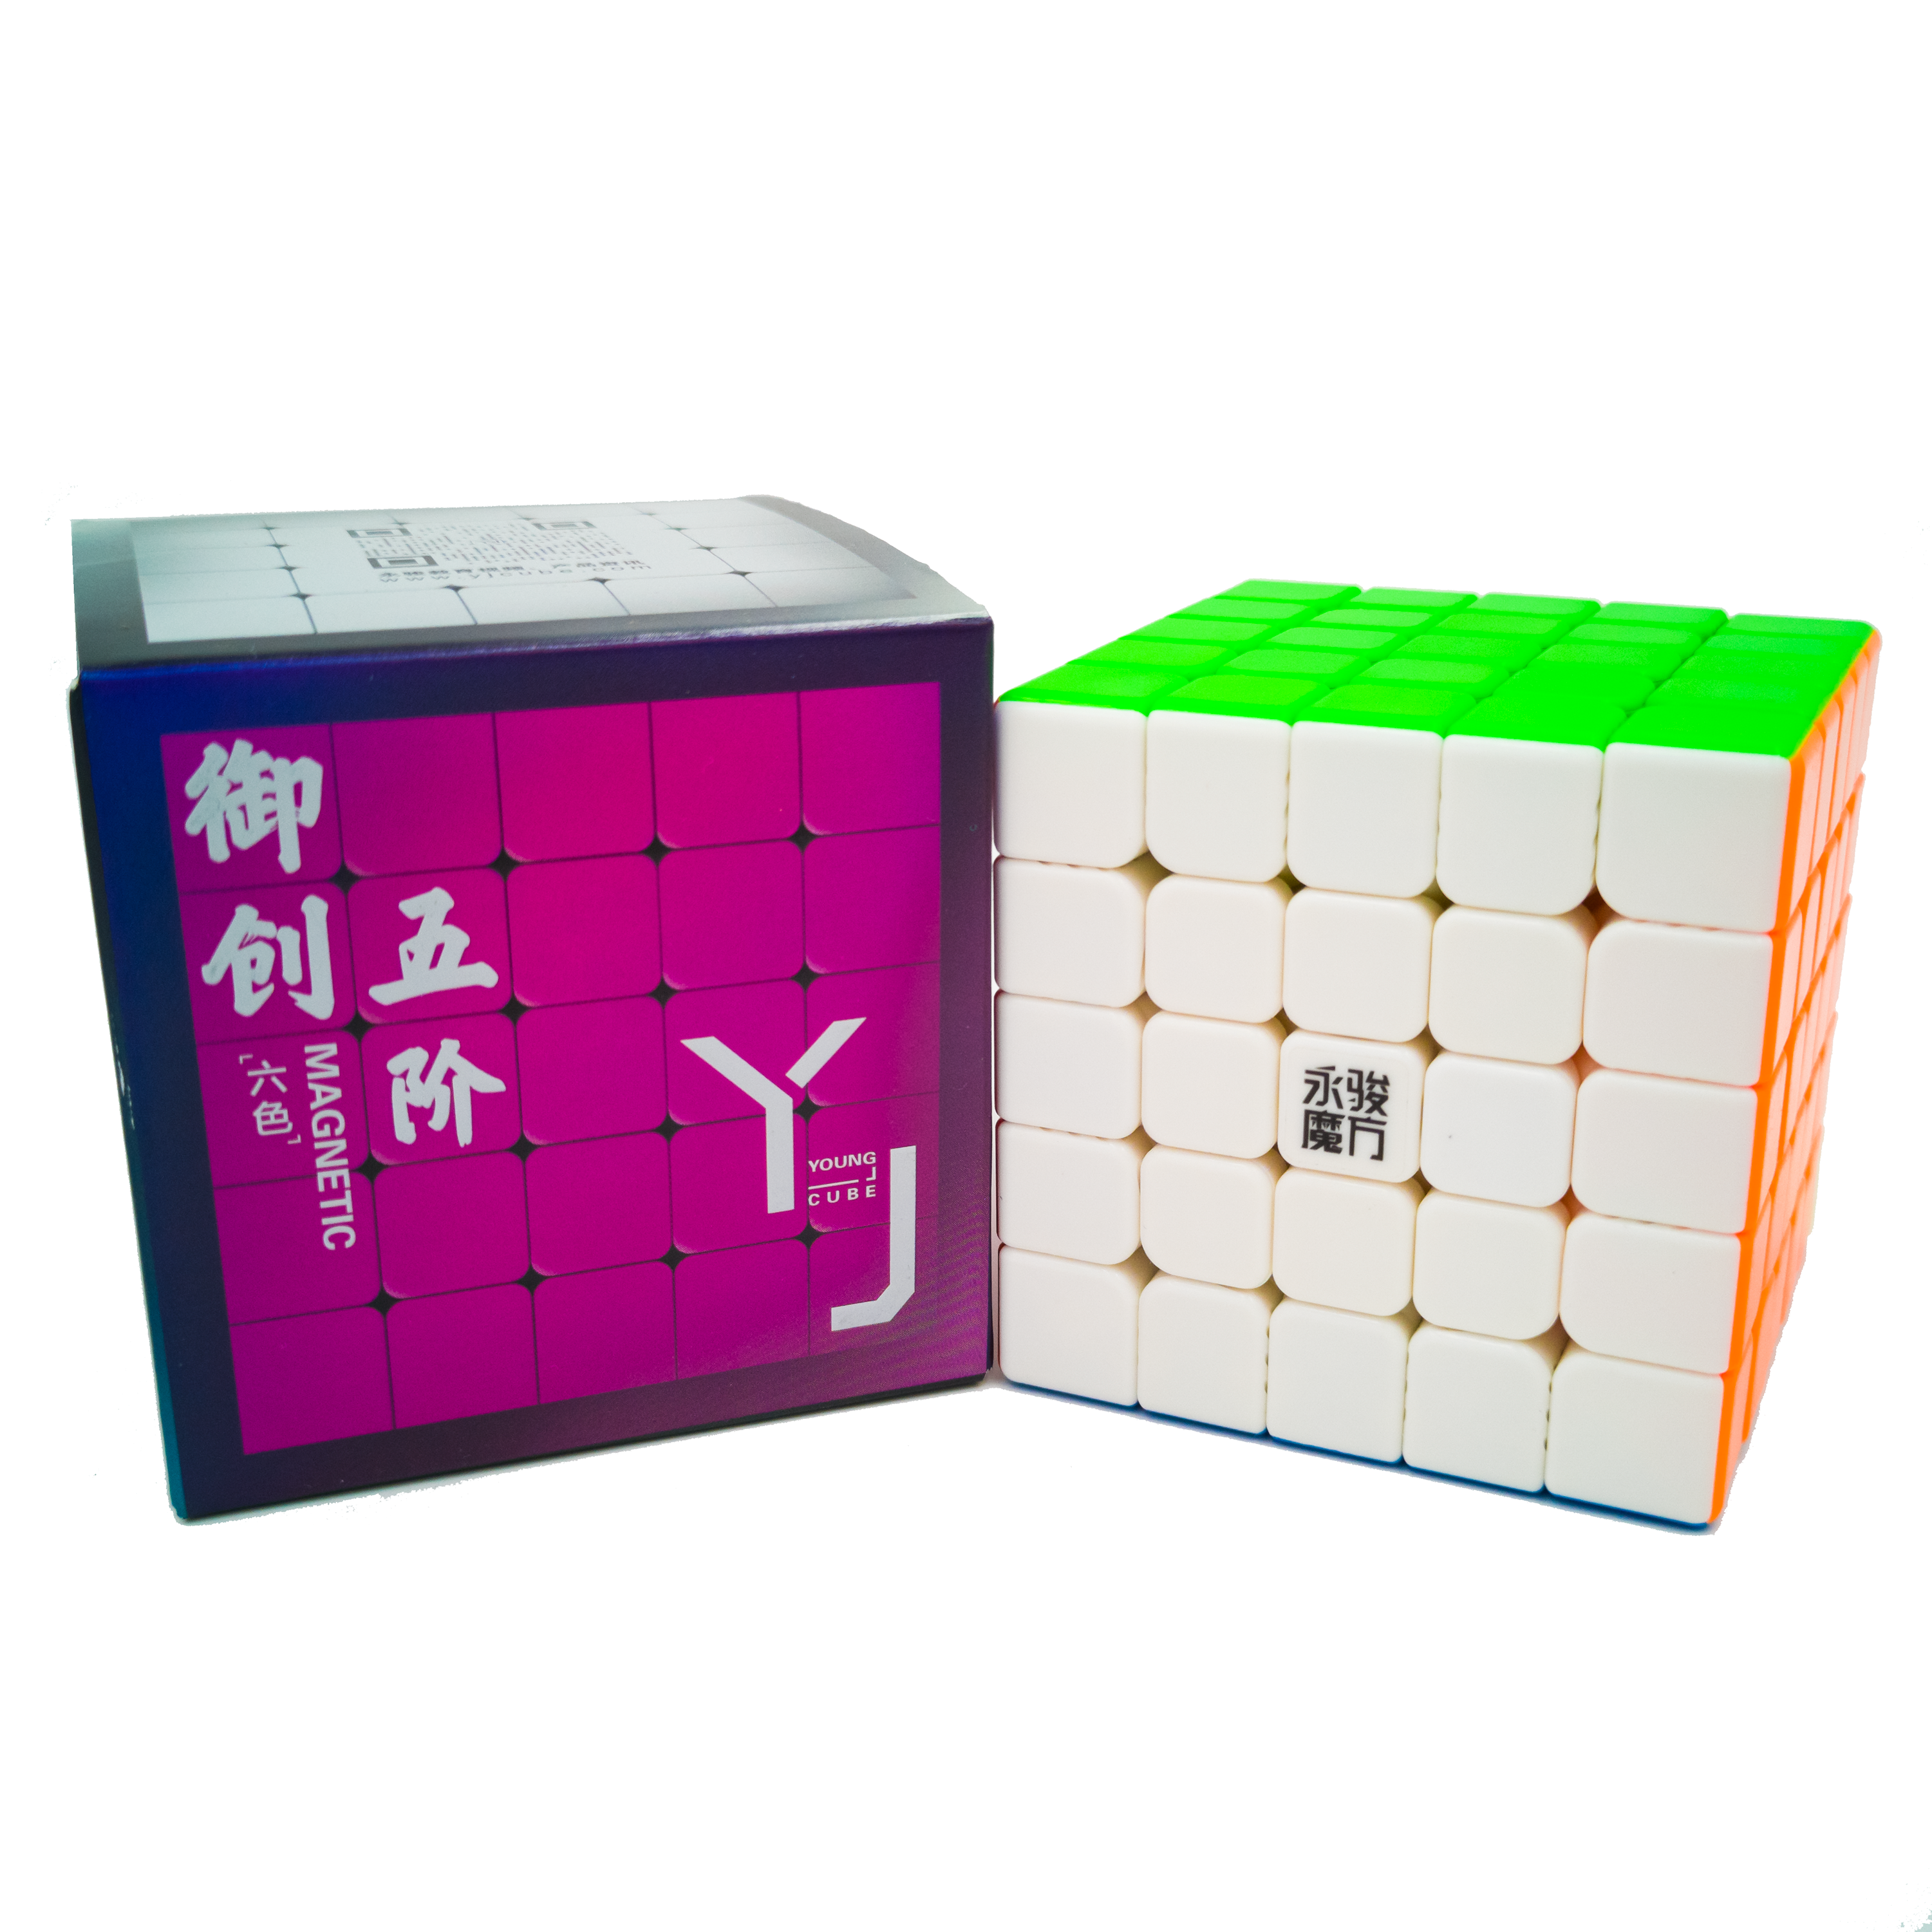 YJ YuChuang V2 M 5x5 - CuberSpace - Speedcube - Singapore